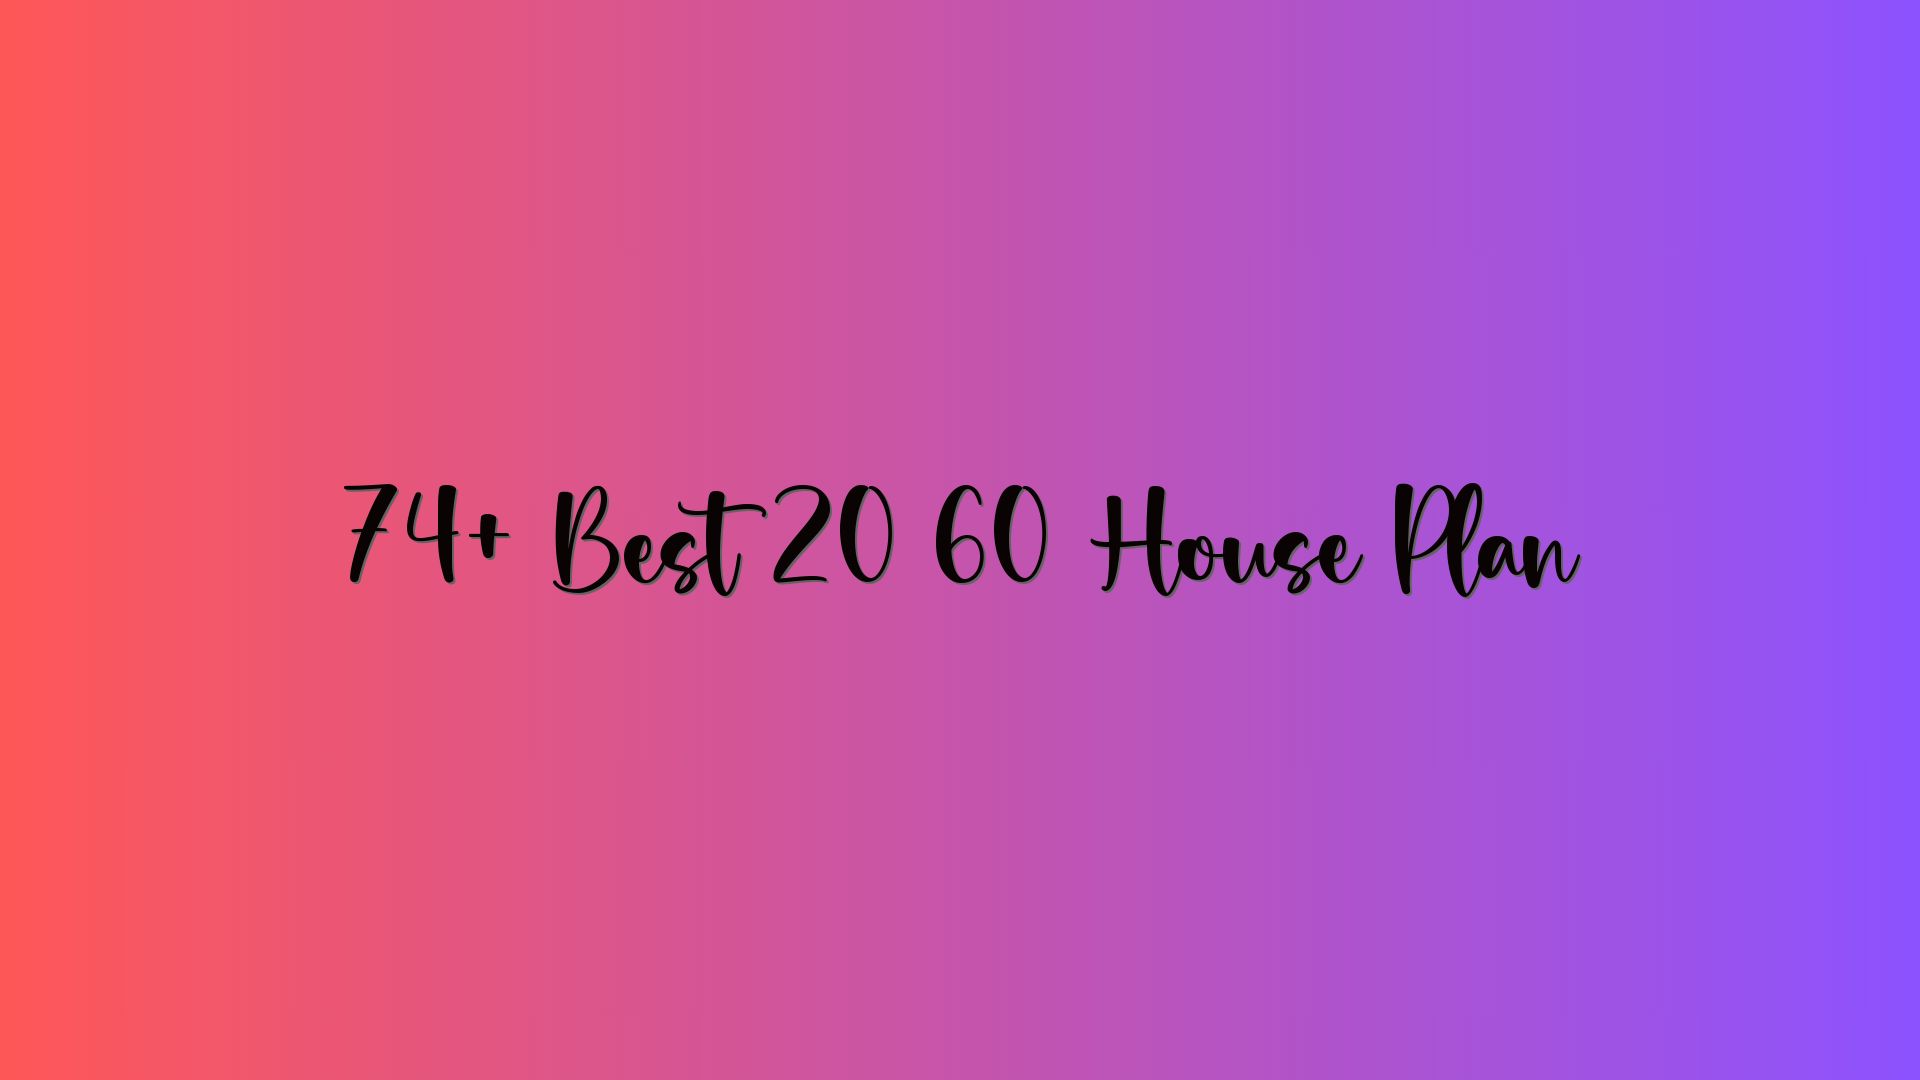 74+ Best 20 60 House Plan